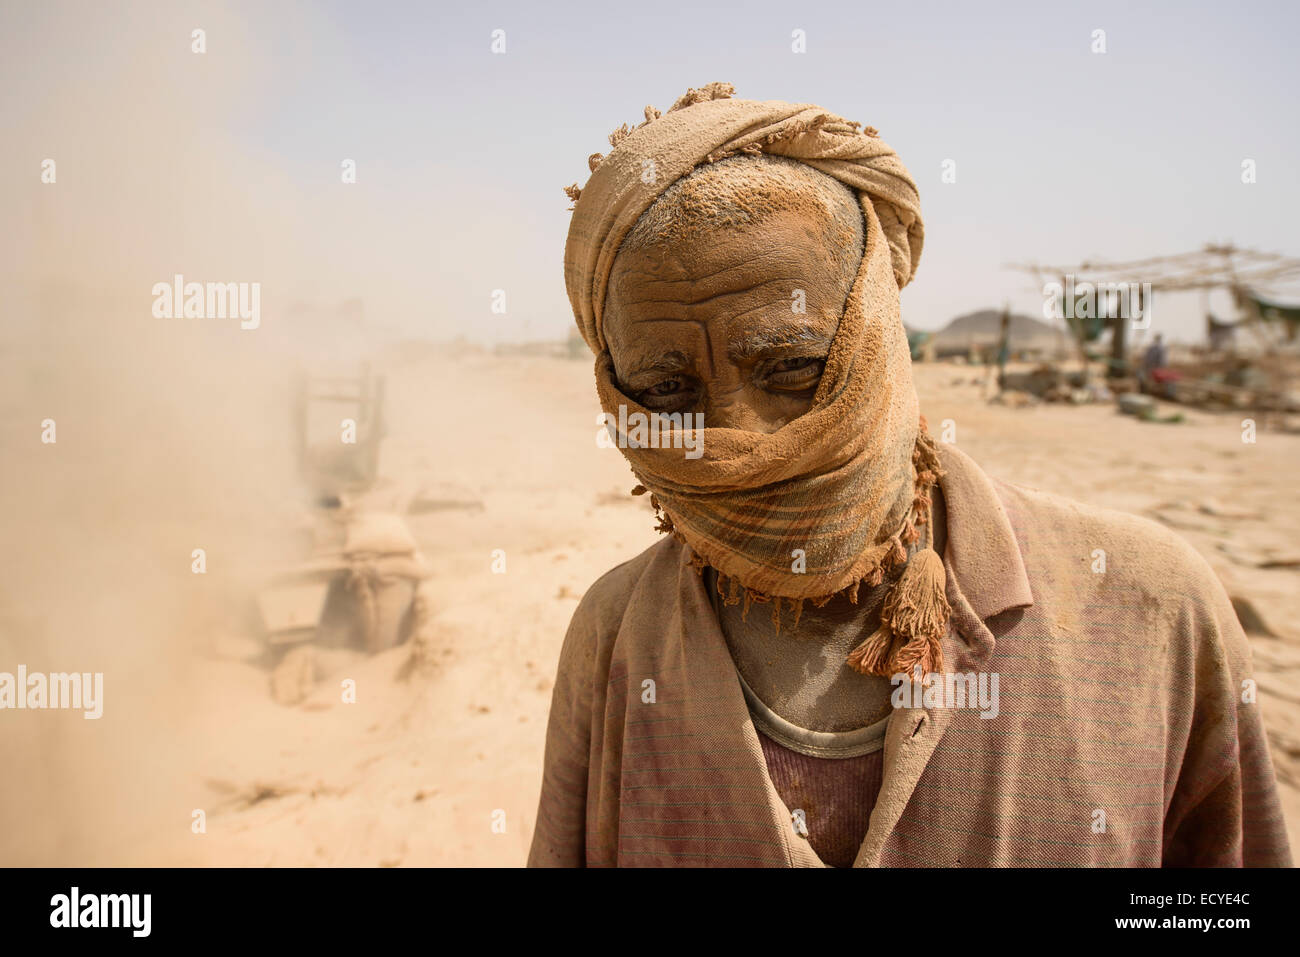 Gold miners in the Delgo Gold Market, Sudan Stock Photo